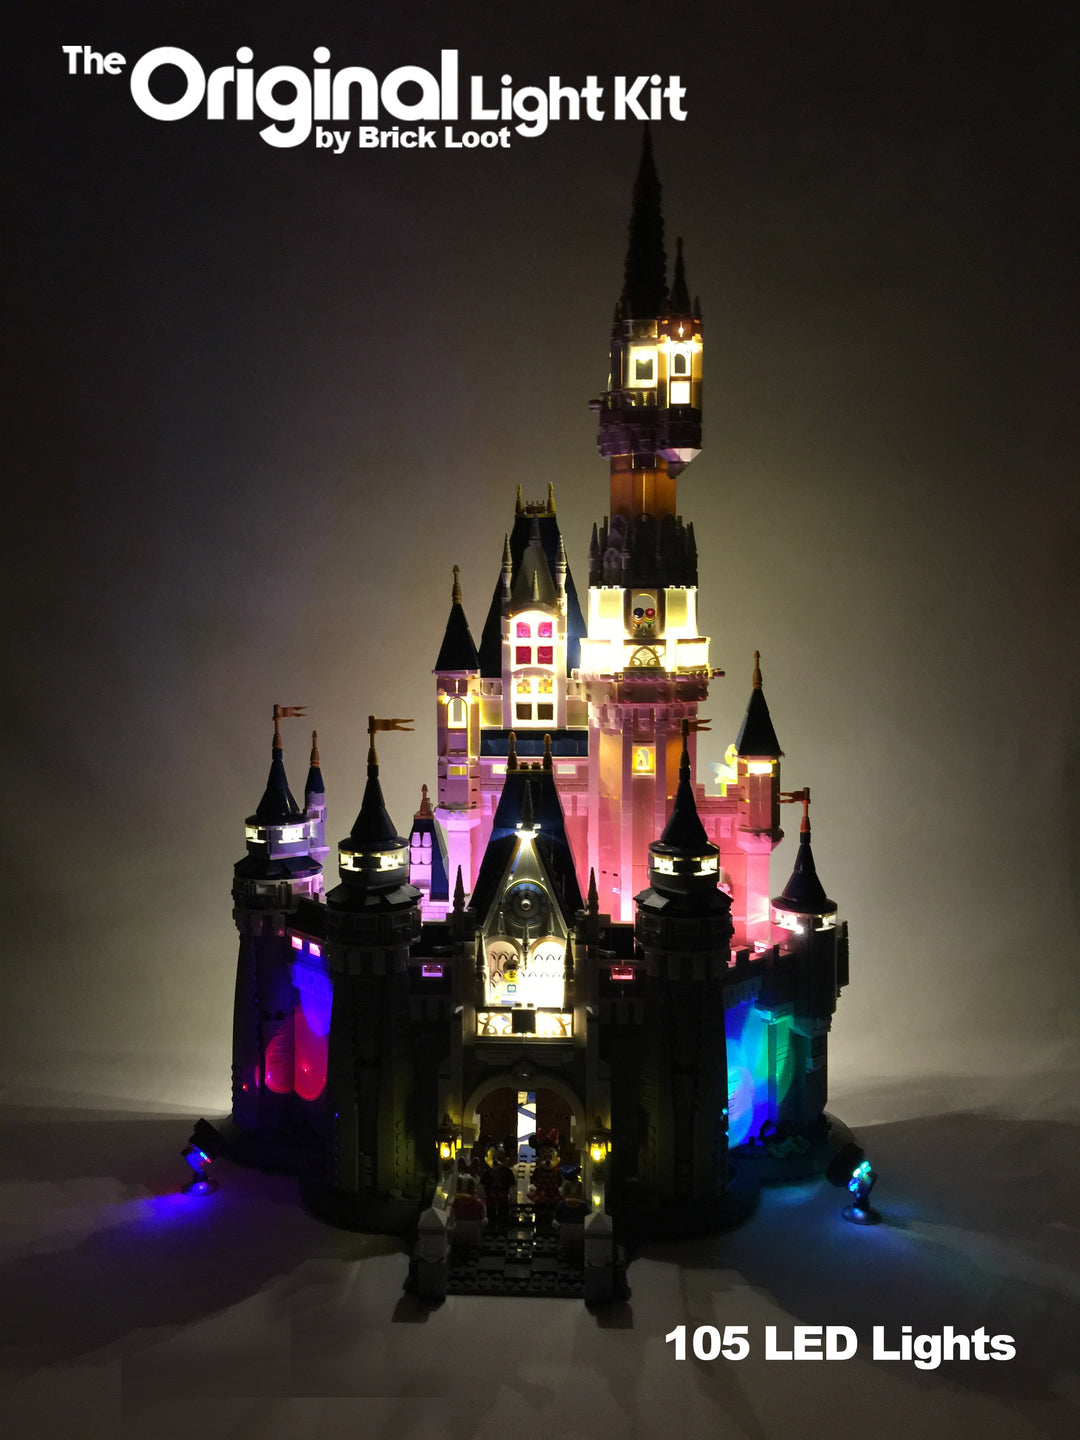 Exterior of the LEGO Disney Castle set 71040, beautifully illuminated with the Brick Loot LED Light Kit with 105 LED lights.